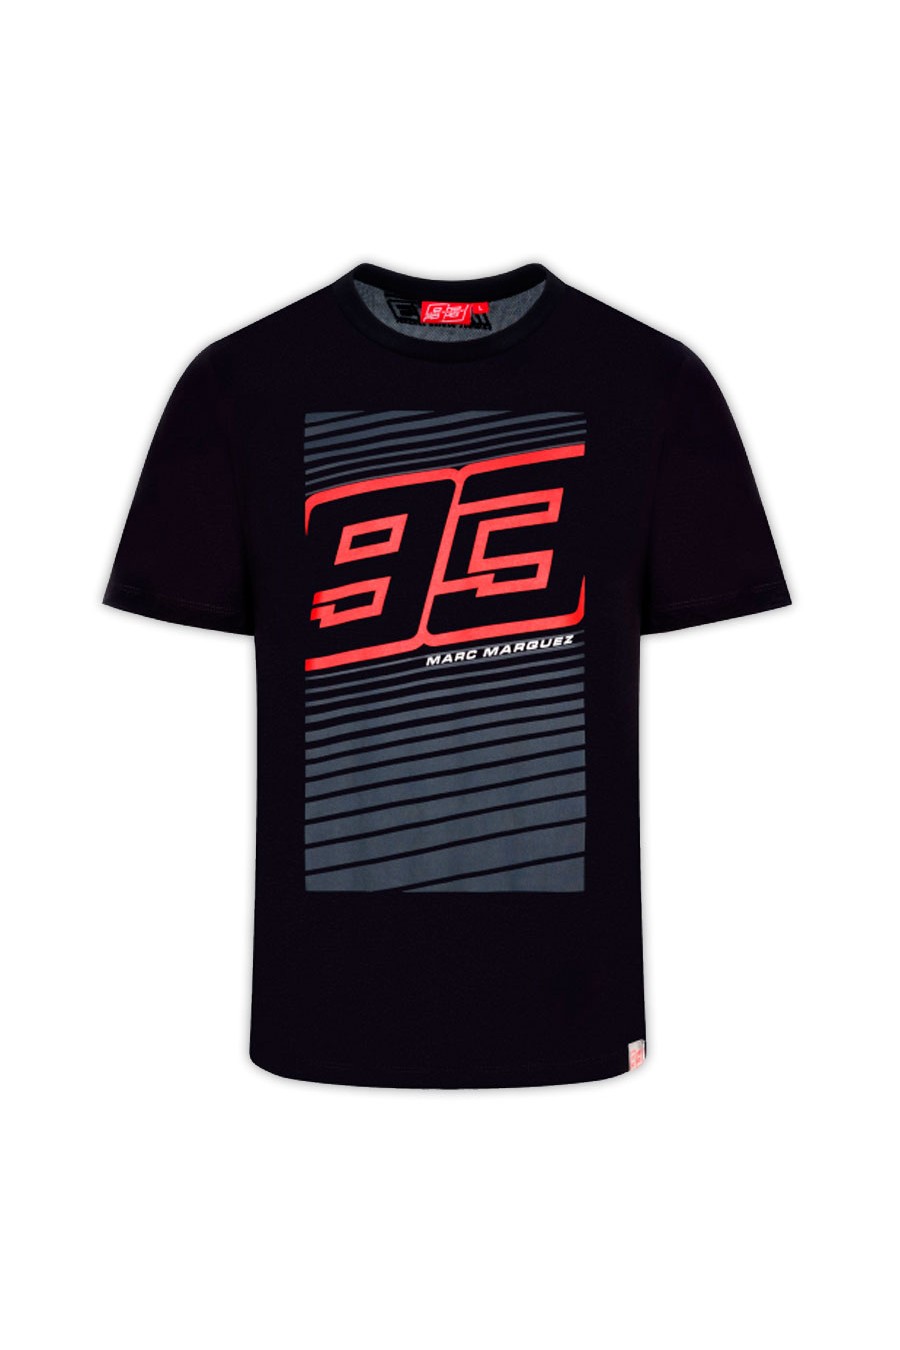 Marc Márquez 93 Black T-shirt | GPBox